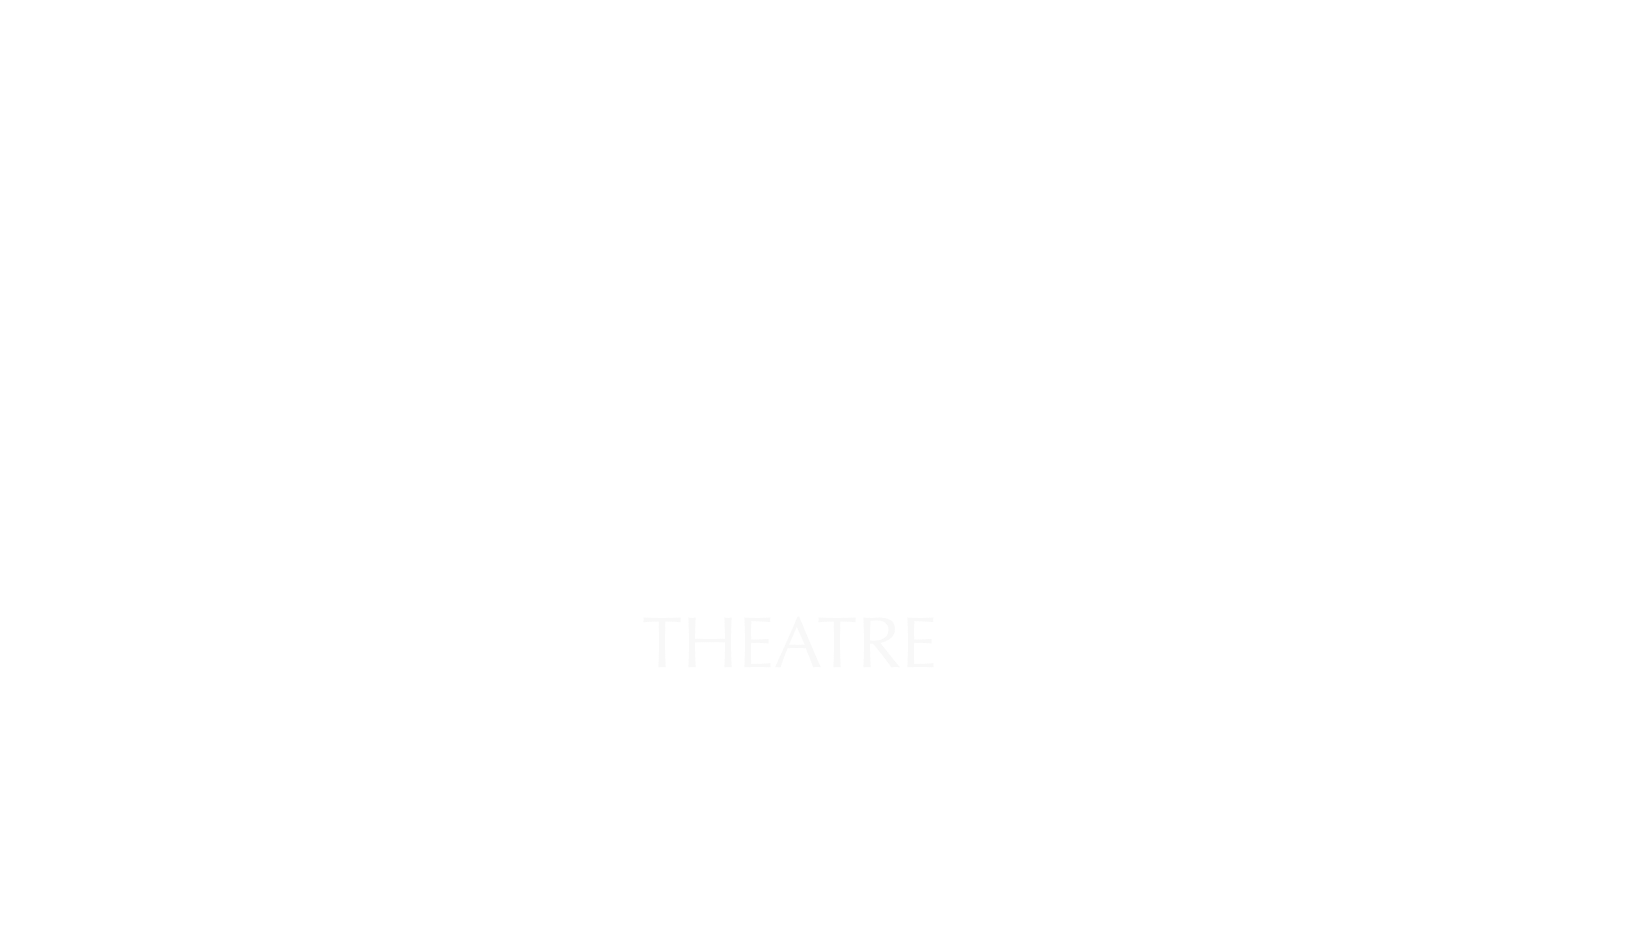 Lower Depth Theatre